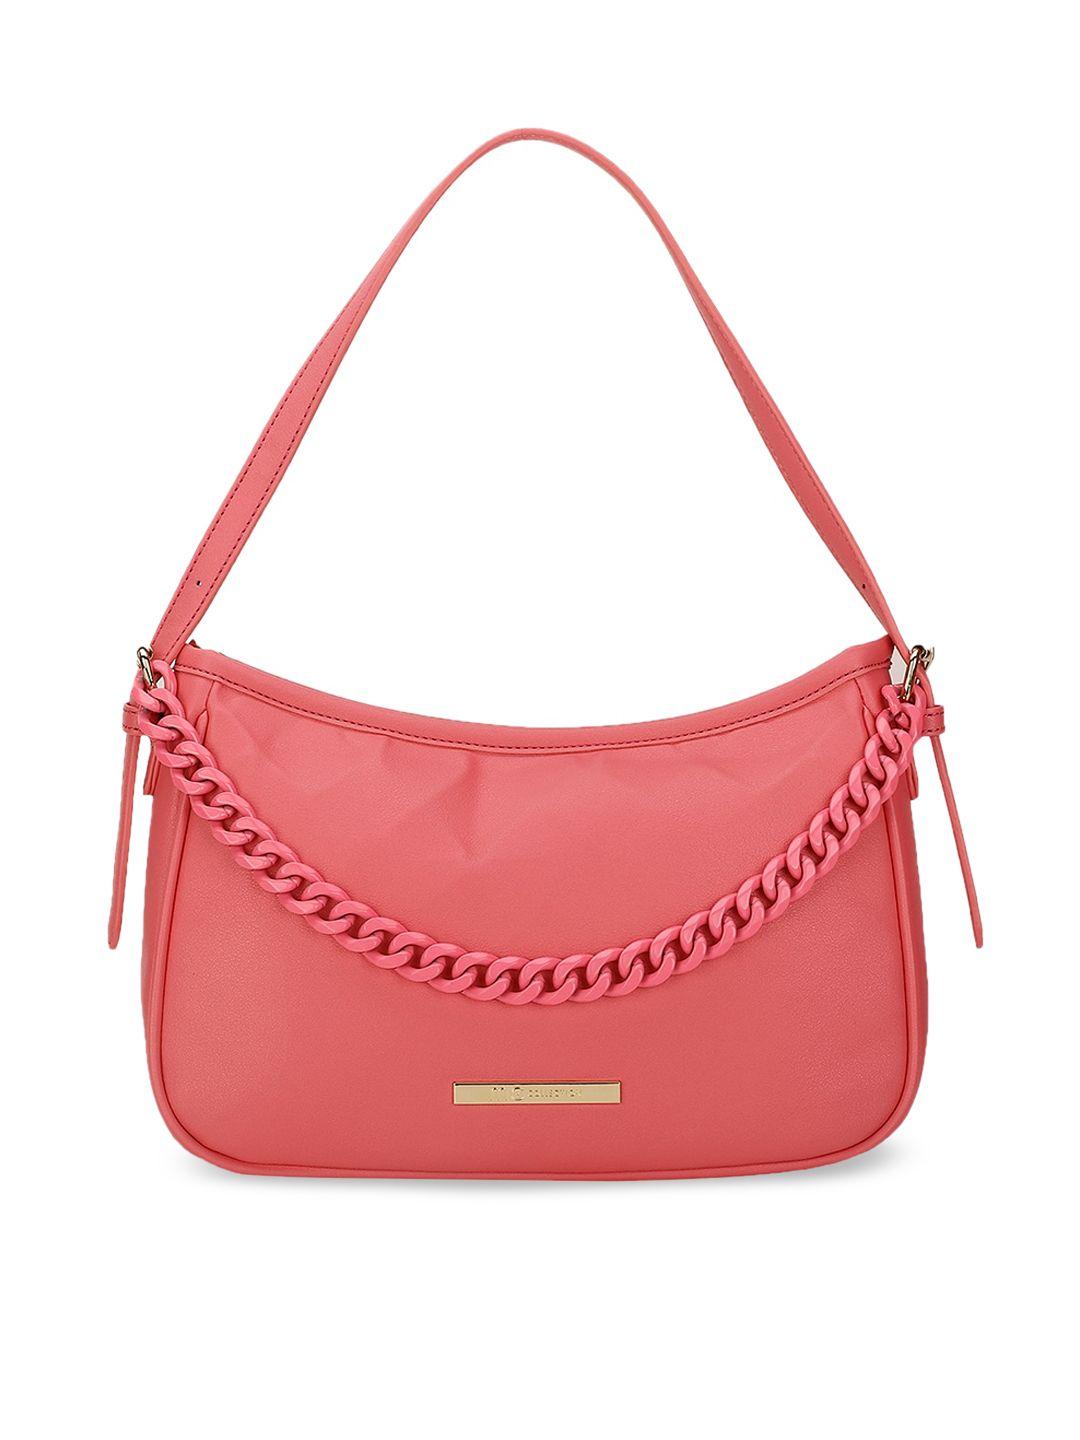 marie claire pink structured shoulder bag